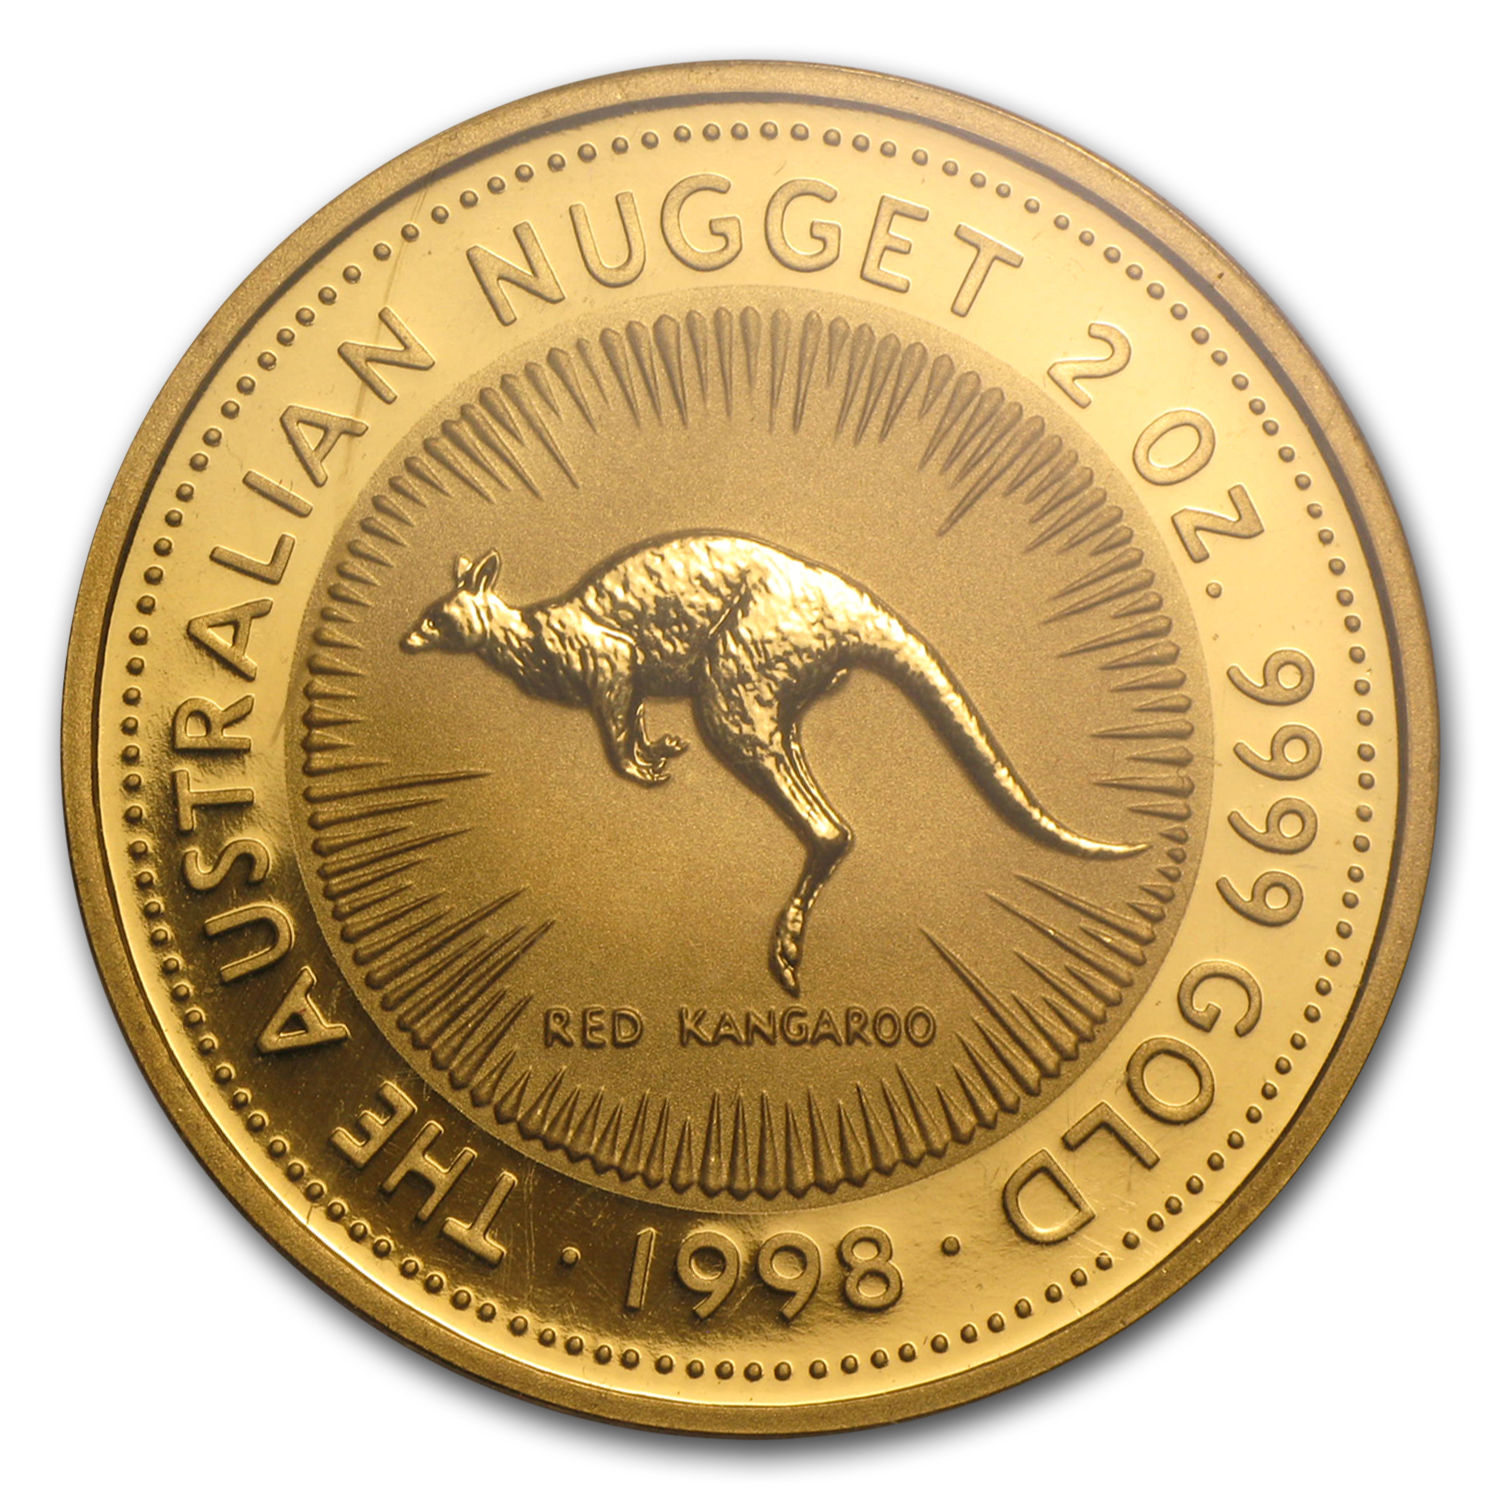 1998 Australia 2 oz Gold Nugget BU - SKU #34569